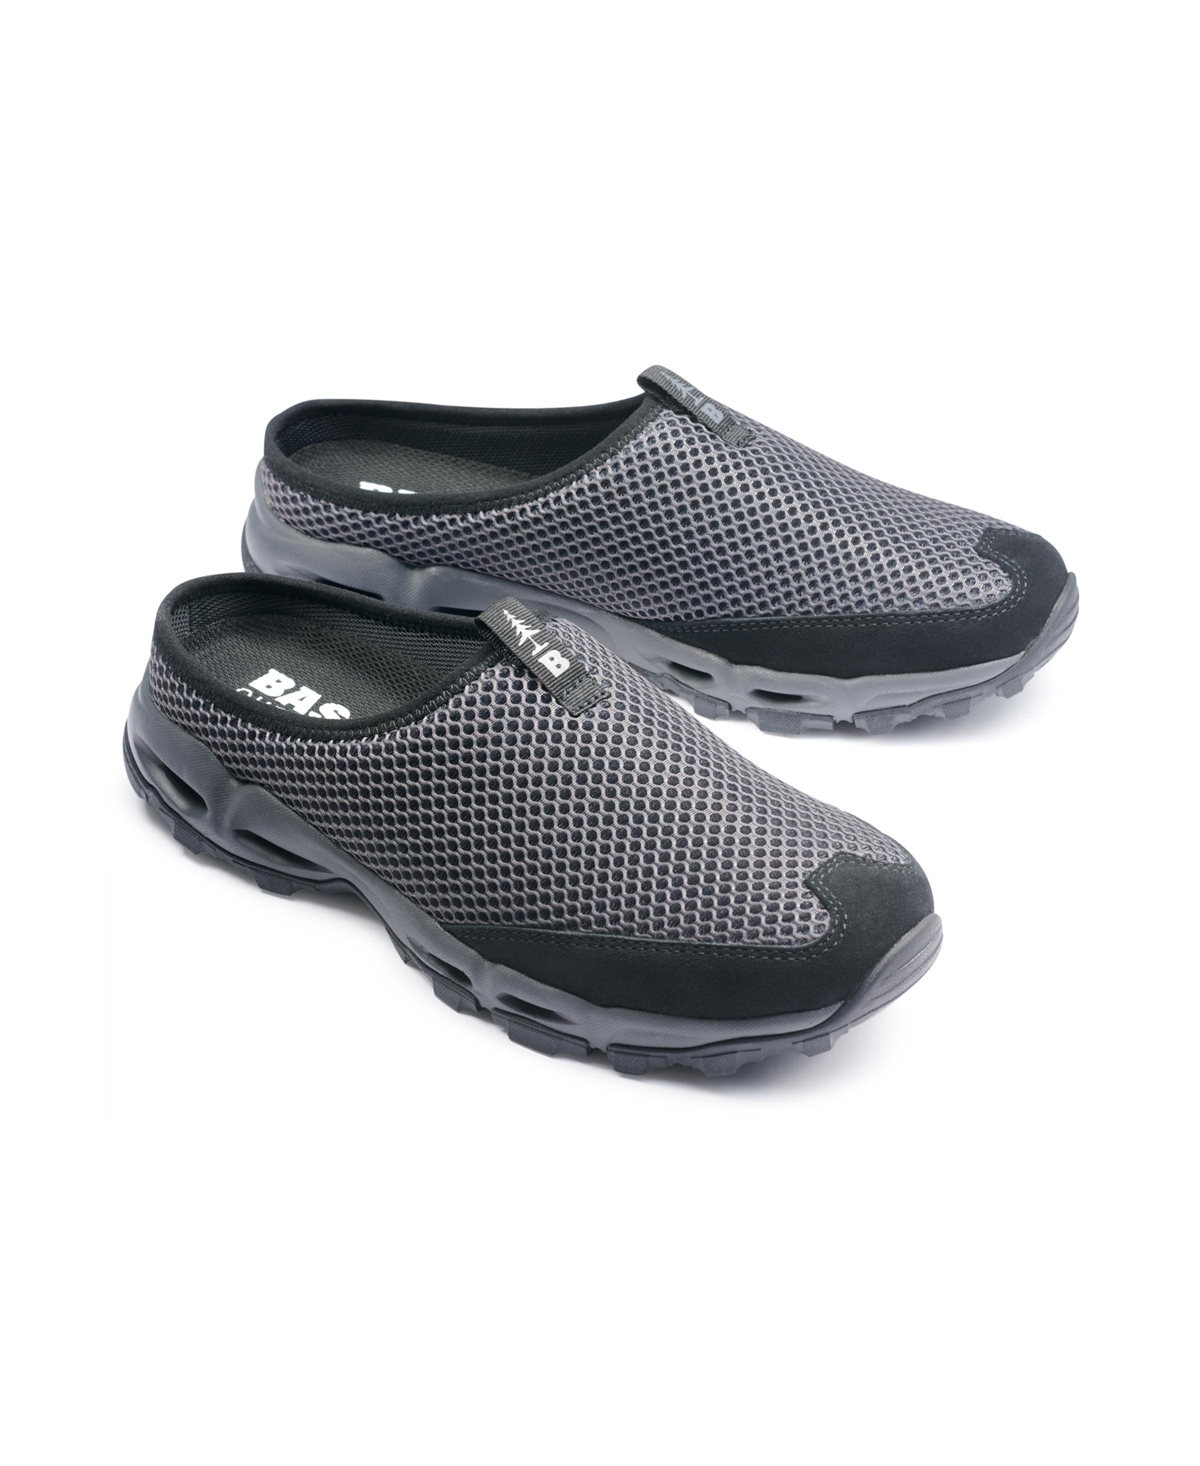 Men's Aqua Mesh Slide Water Shoe - Asphalt